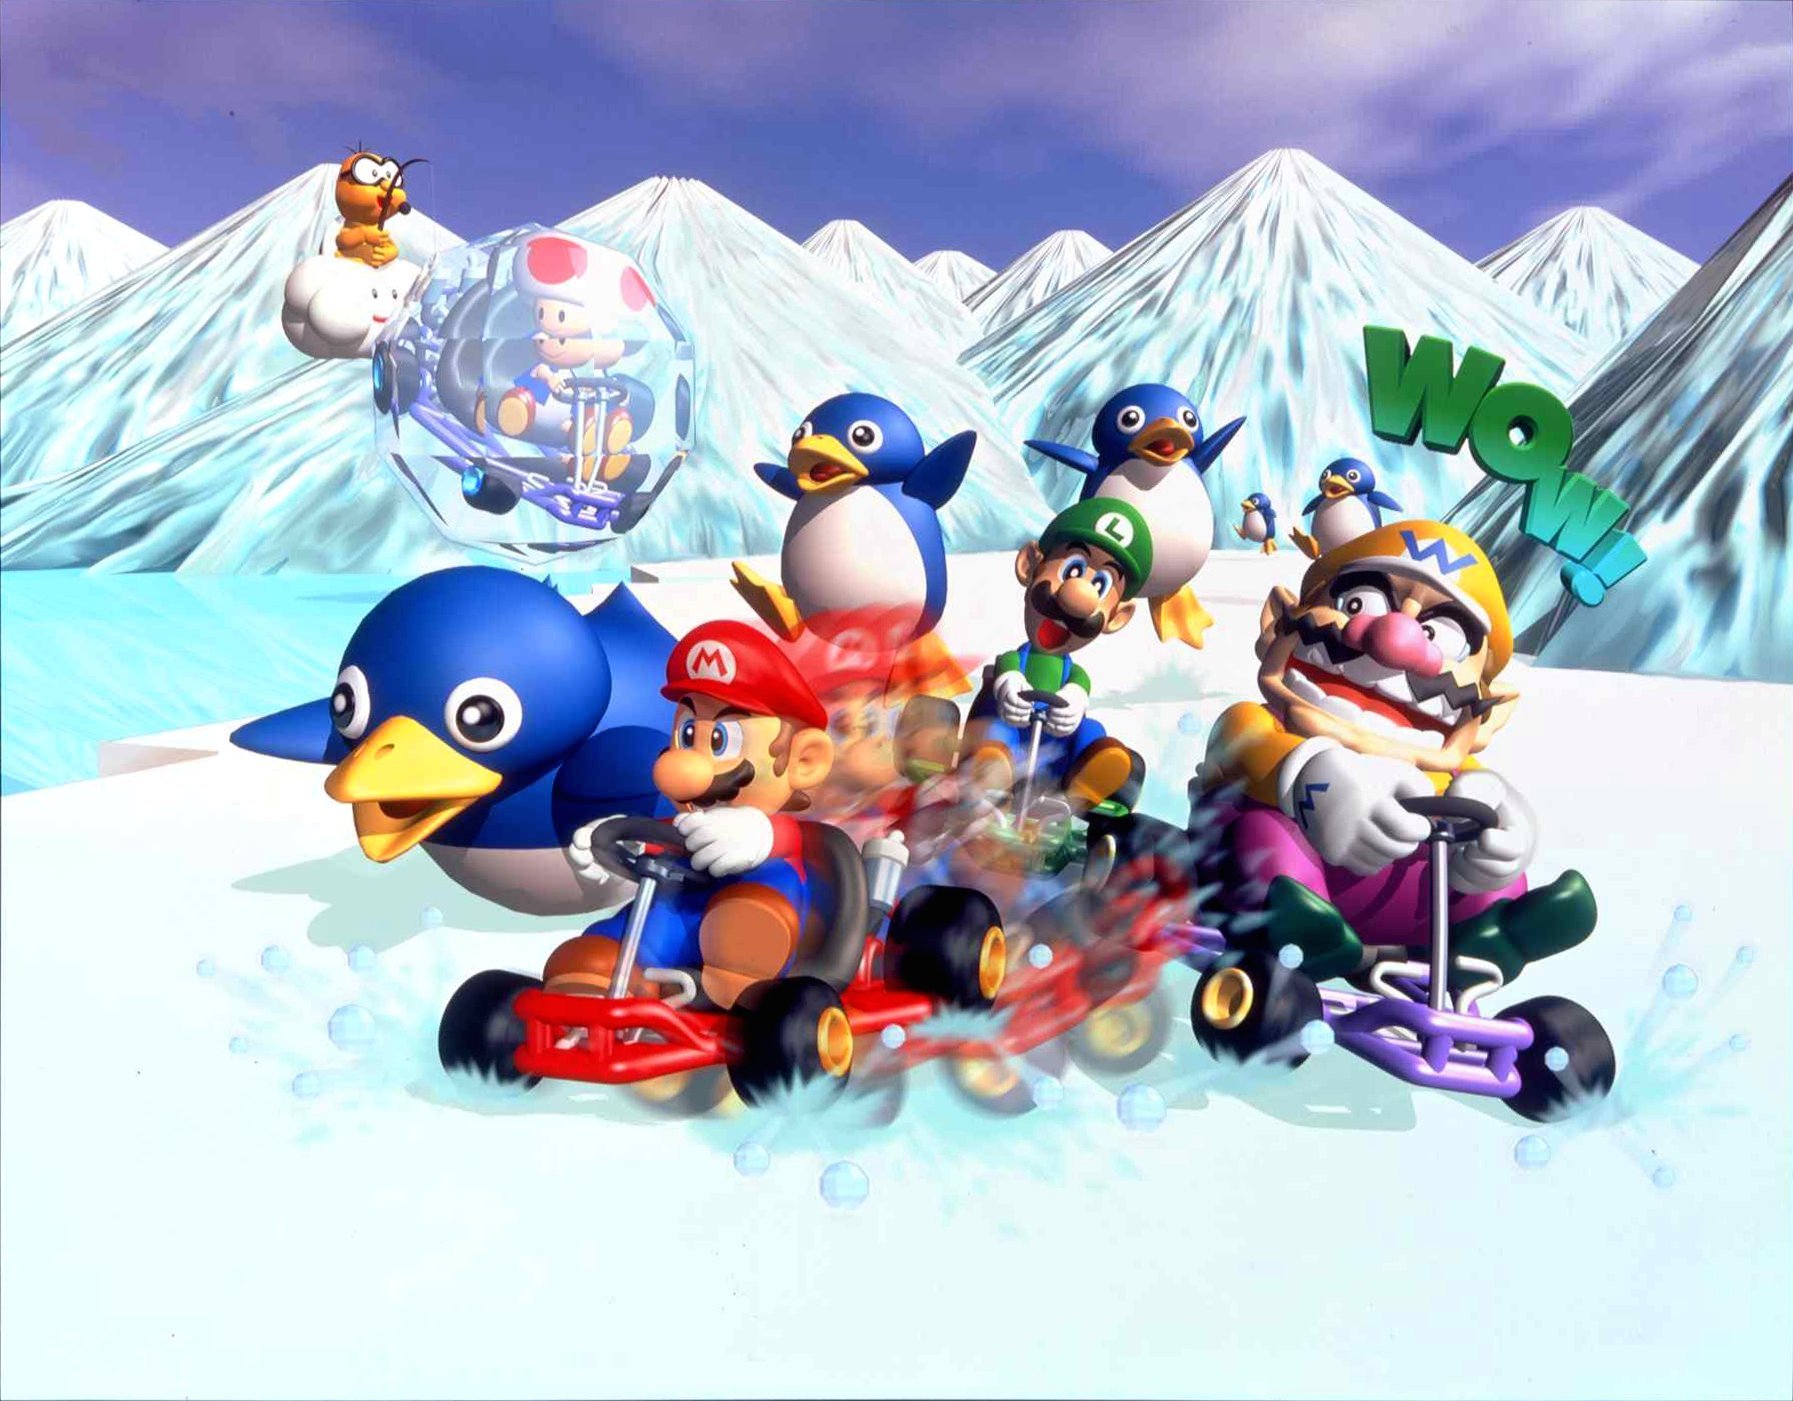 Mario Kart Wii (Video Game) - TV Tropes